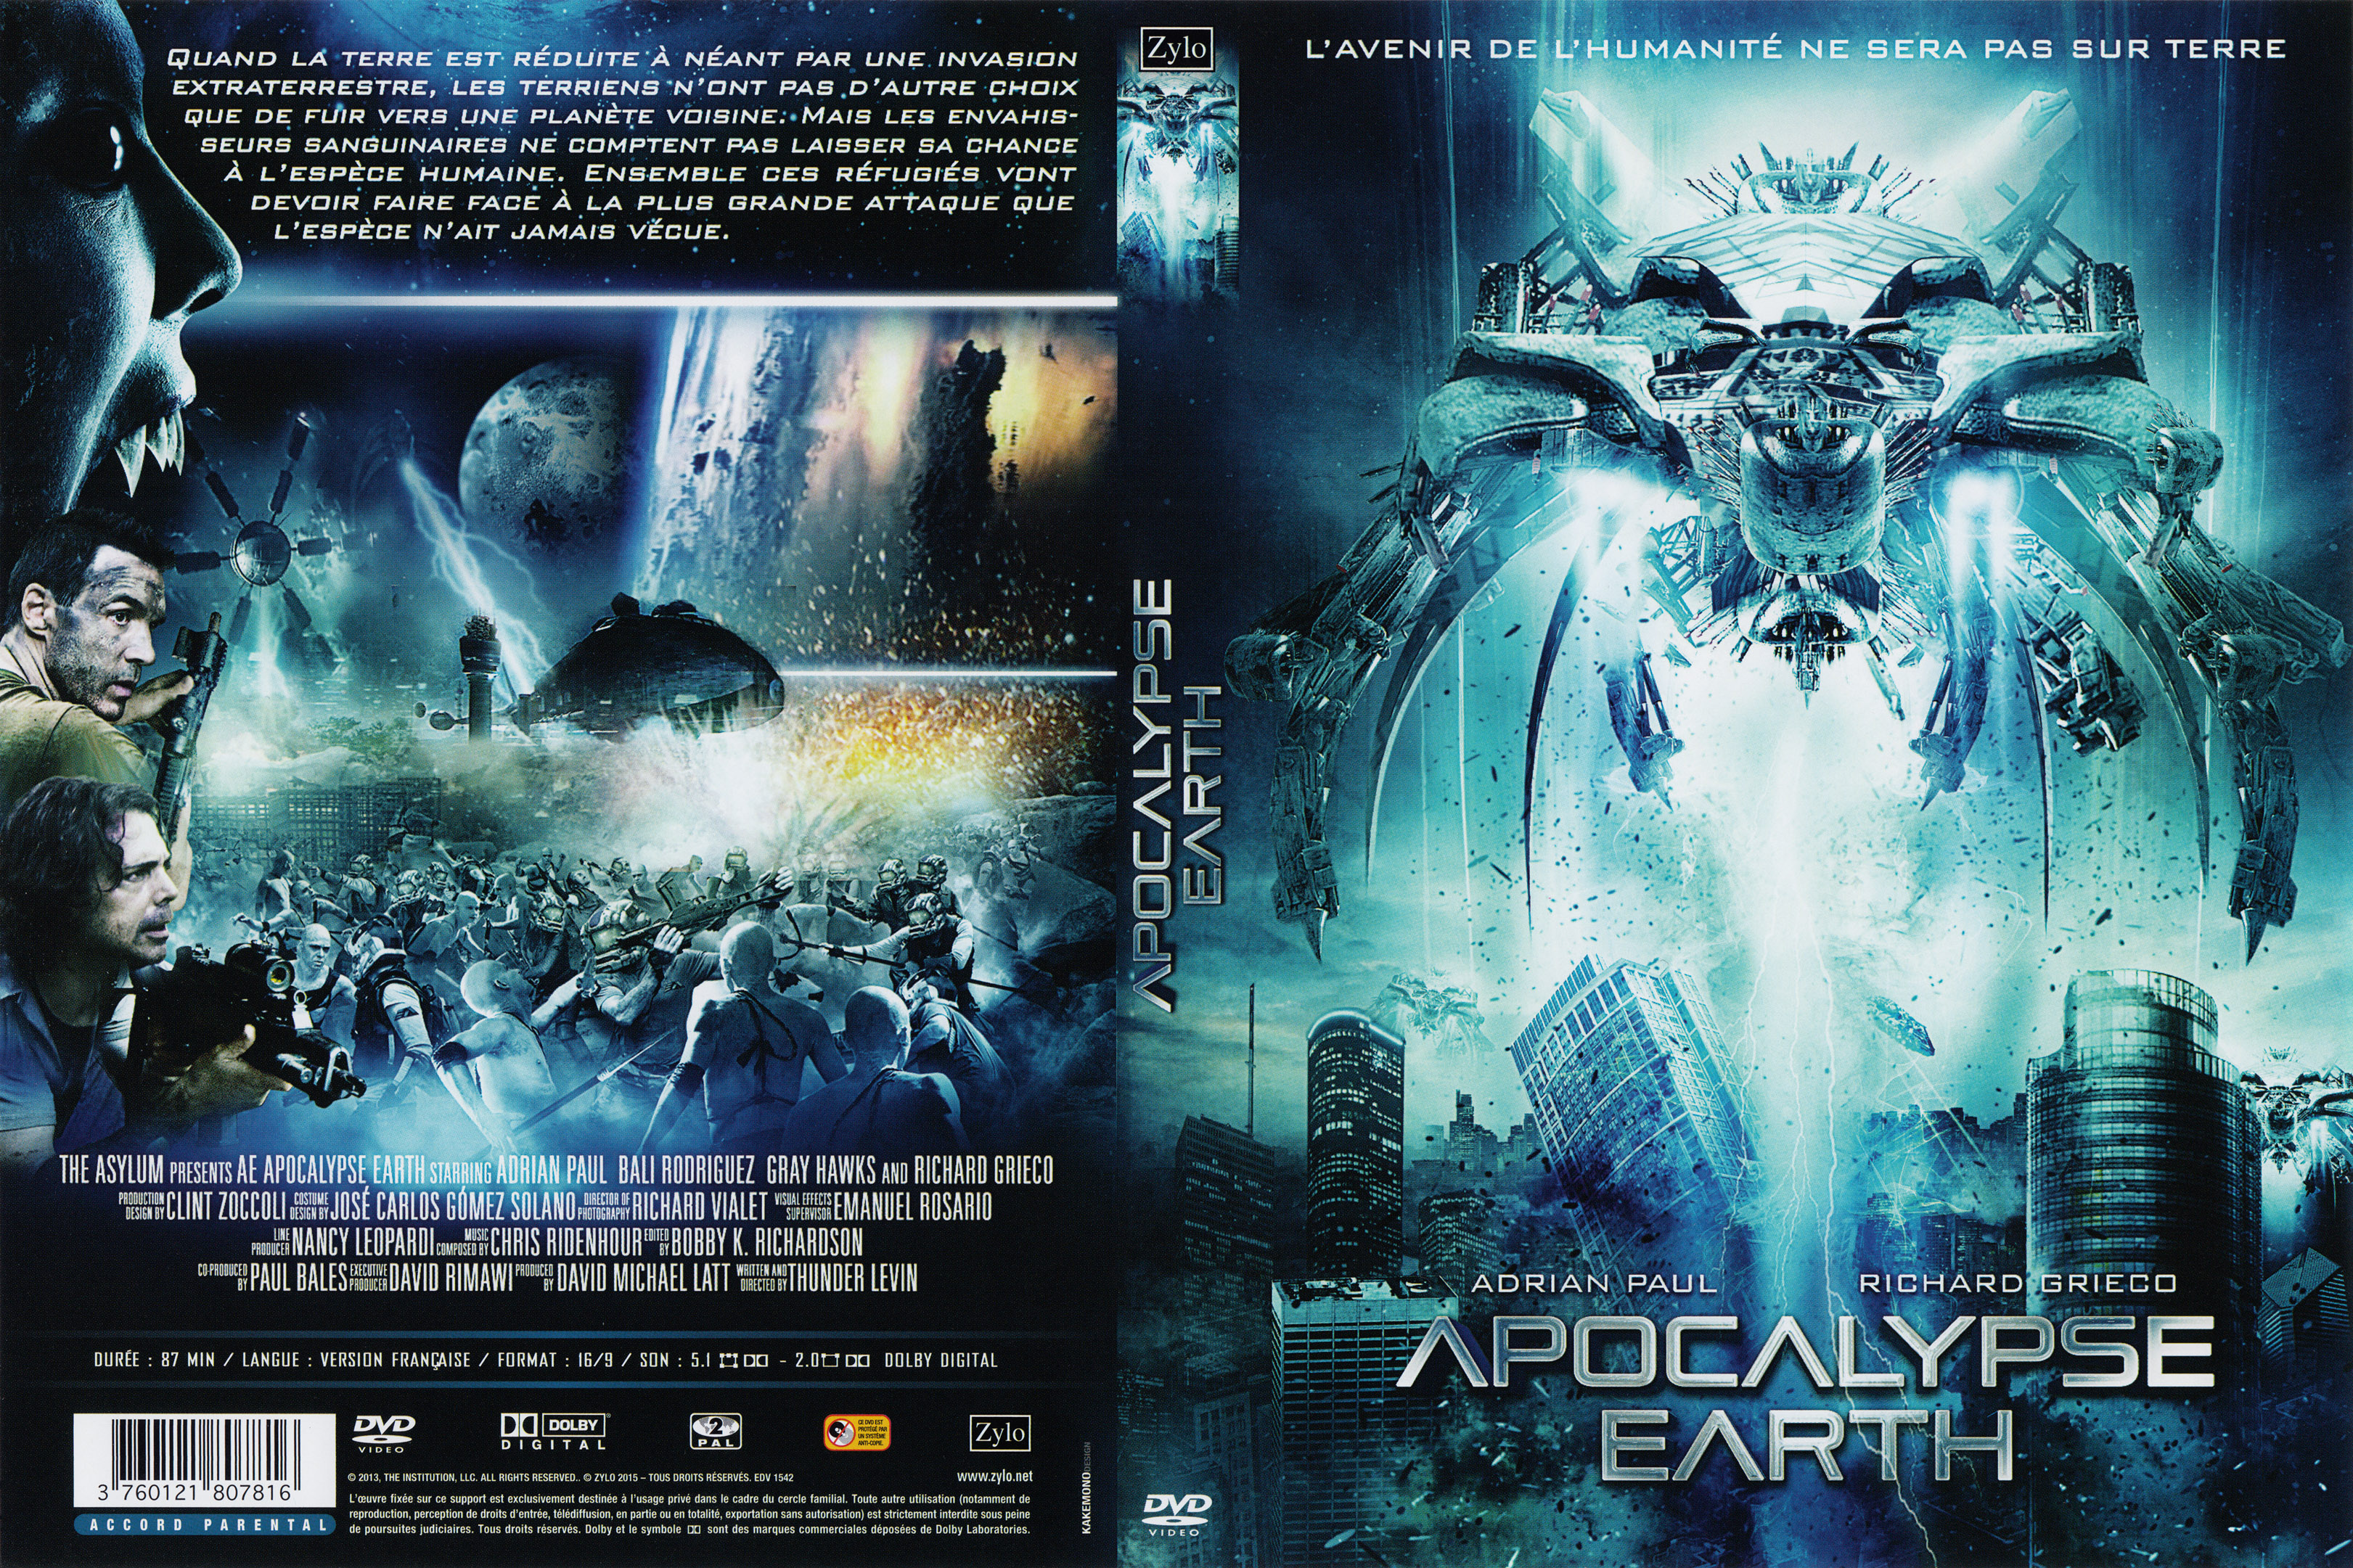 Jaquette DVD Apocalypse earth